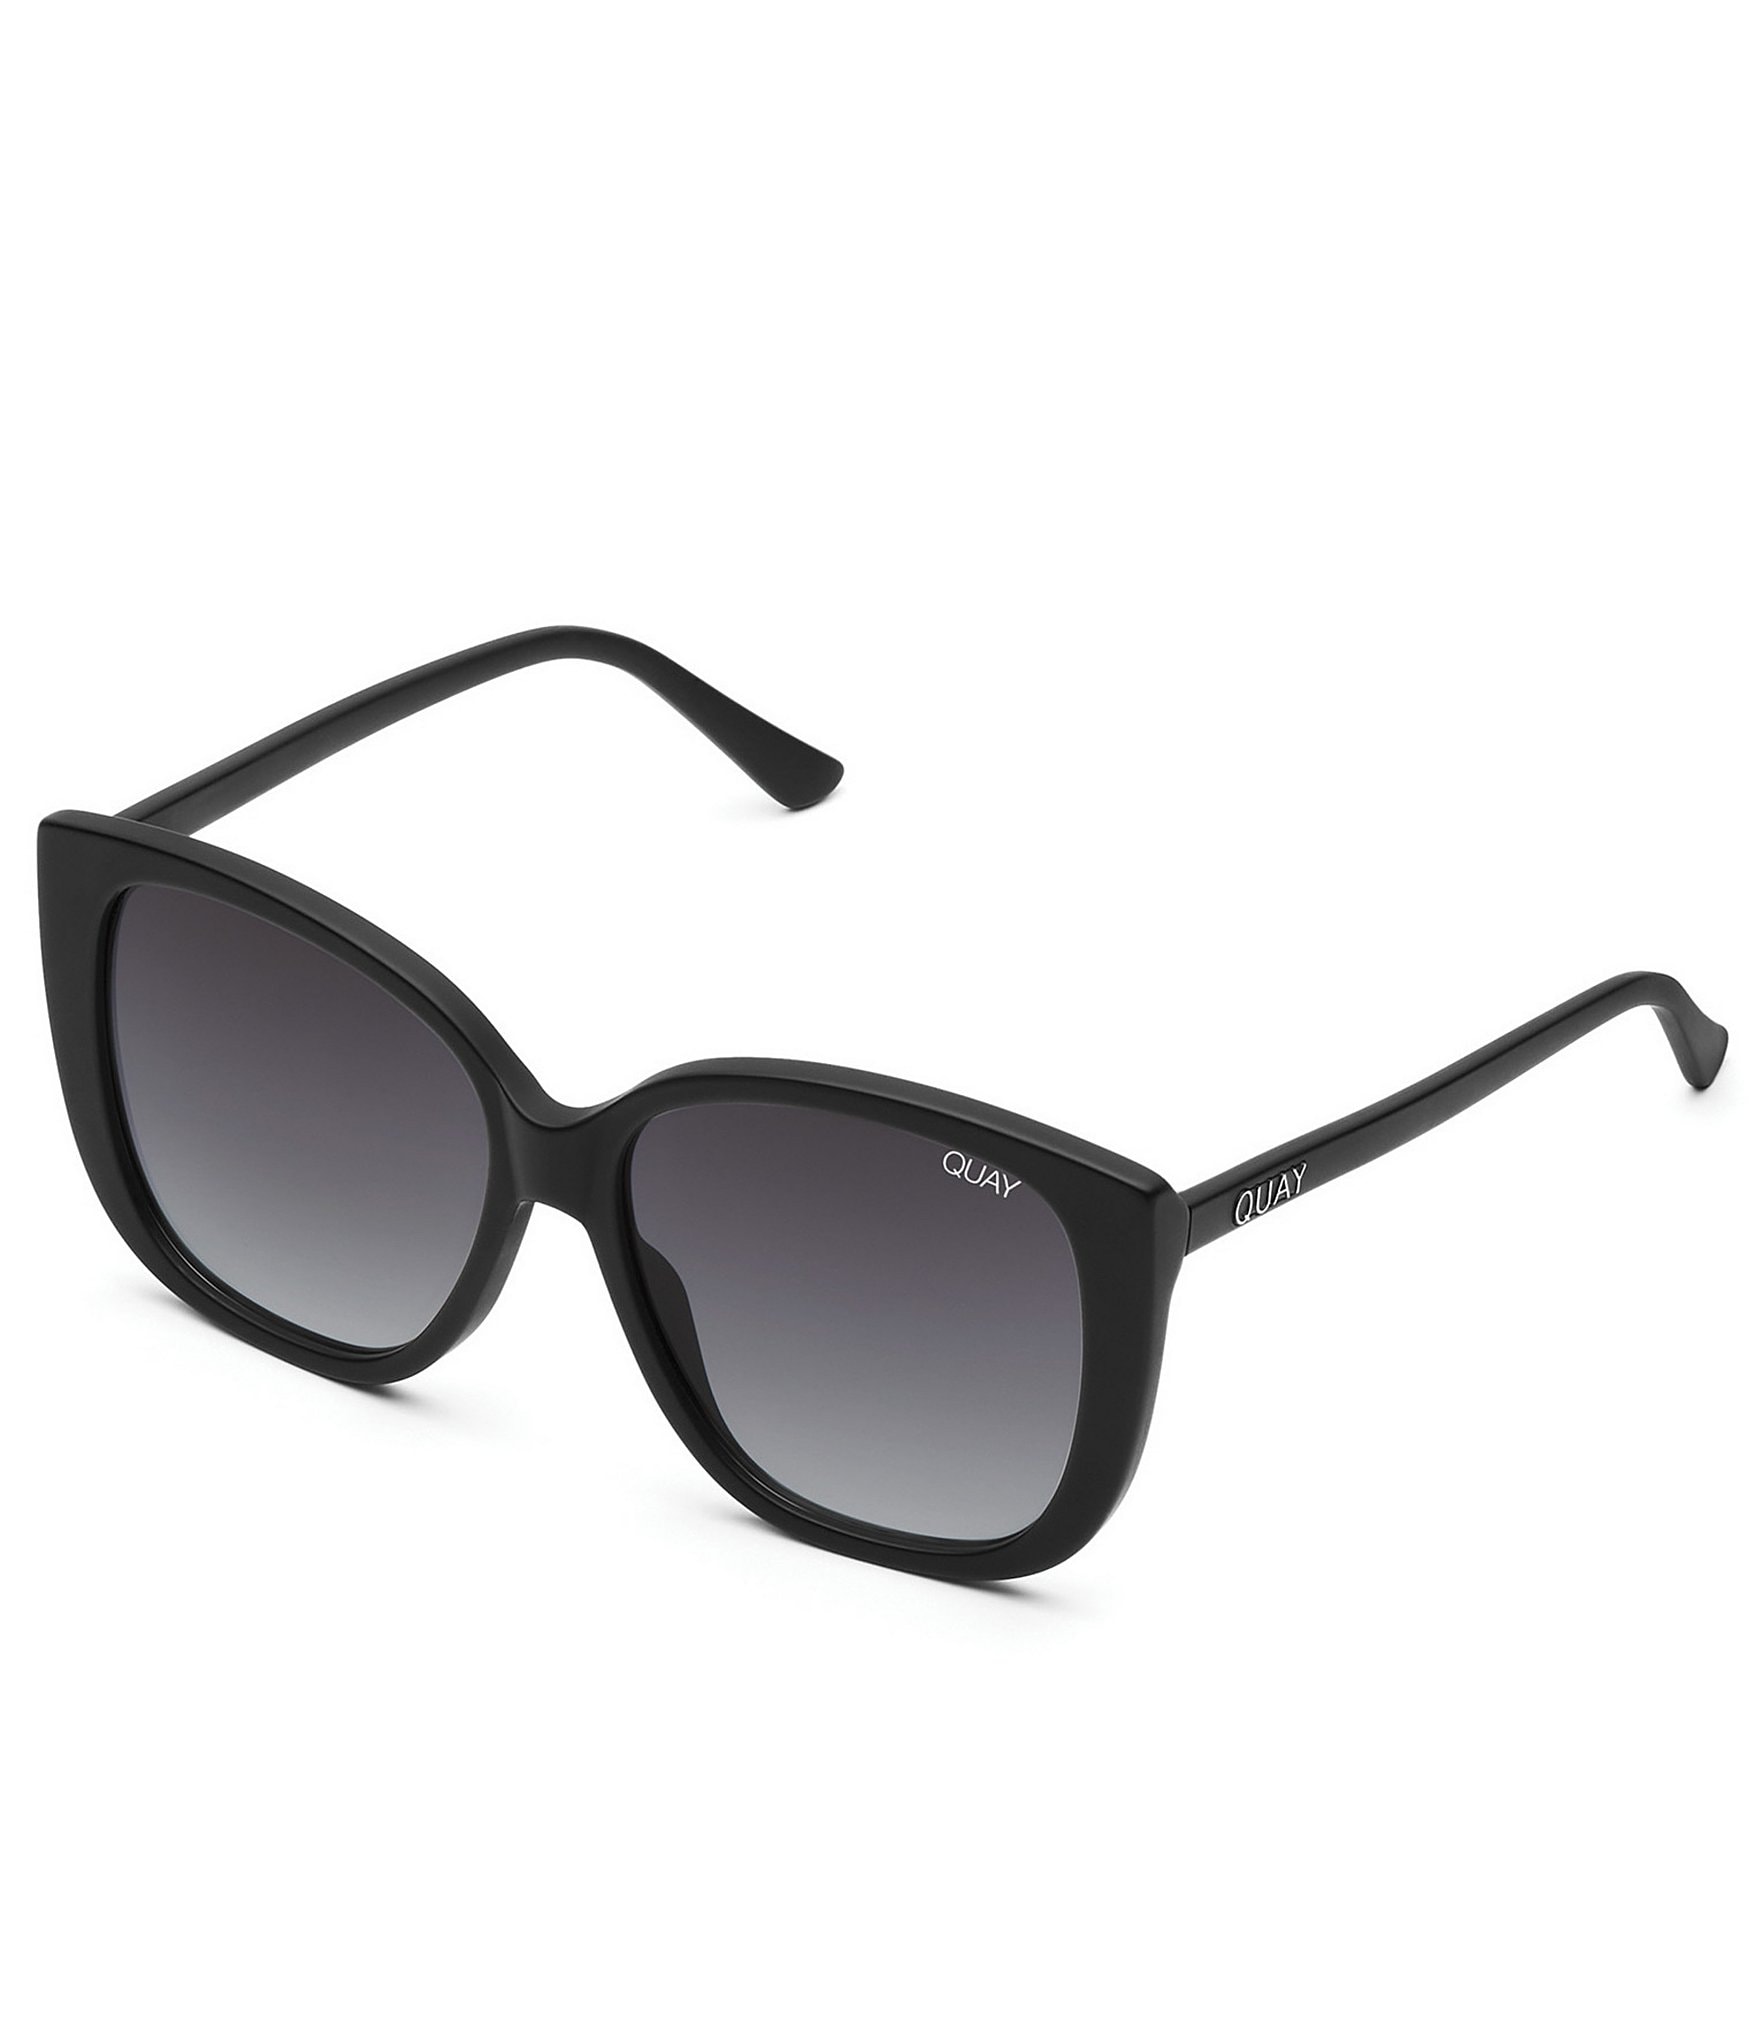 Quay Black Oversized Sunglasses | peacecommission.kdsg.gov.ng